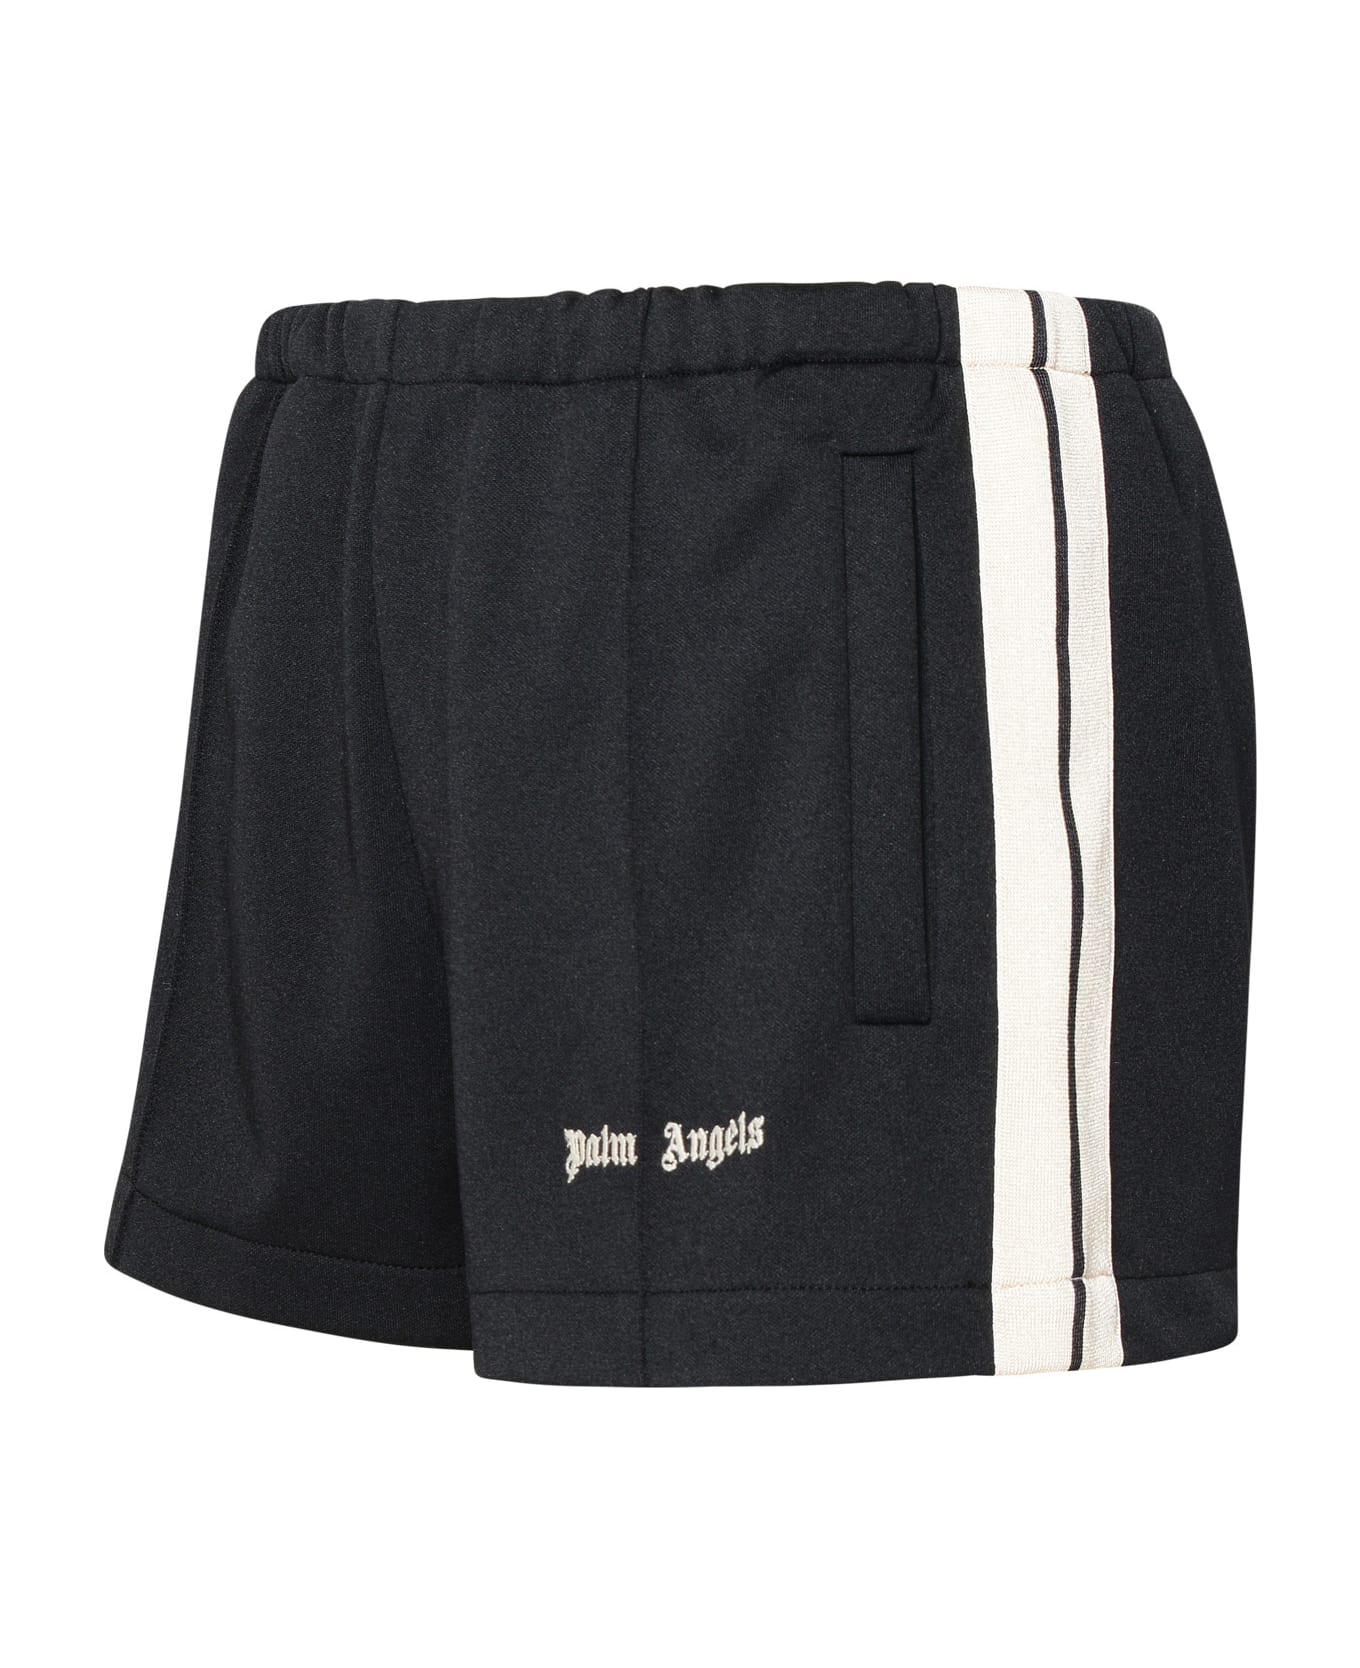 Palm Angels Black Polyester Sporty Shorts - Black off ショートパンツ